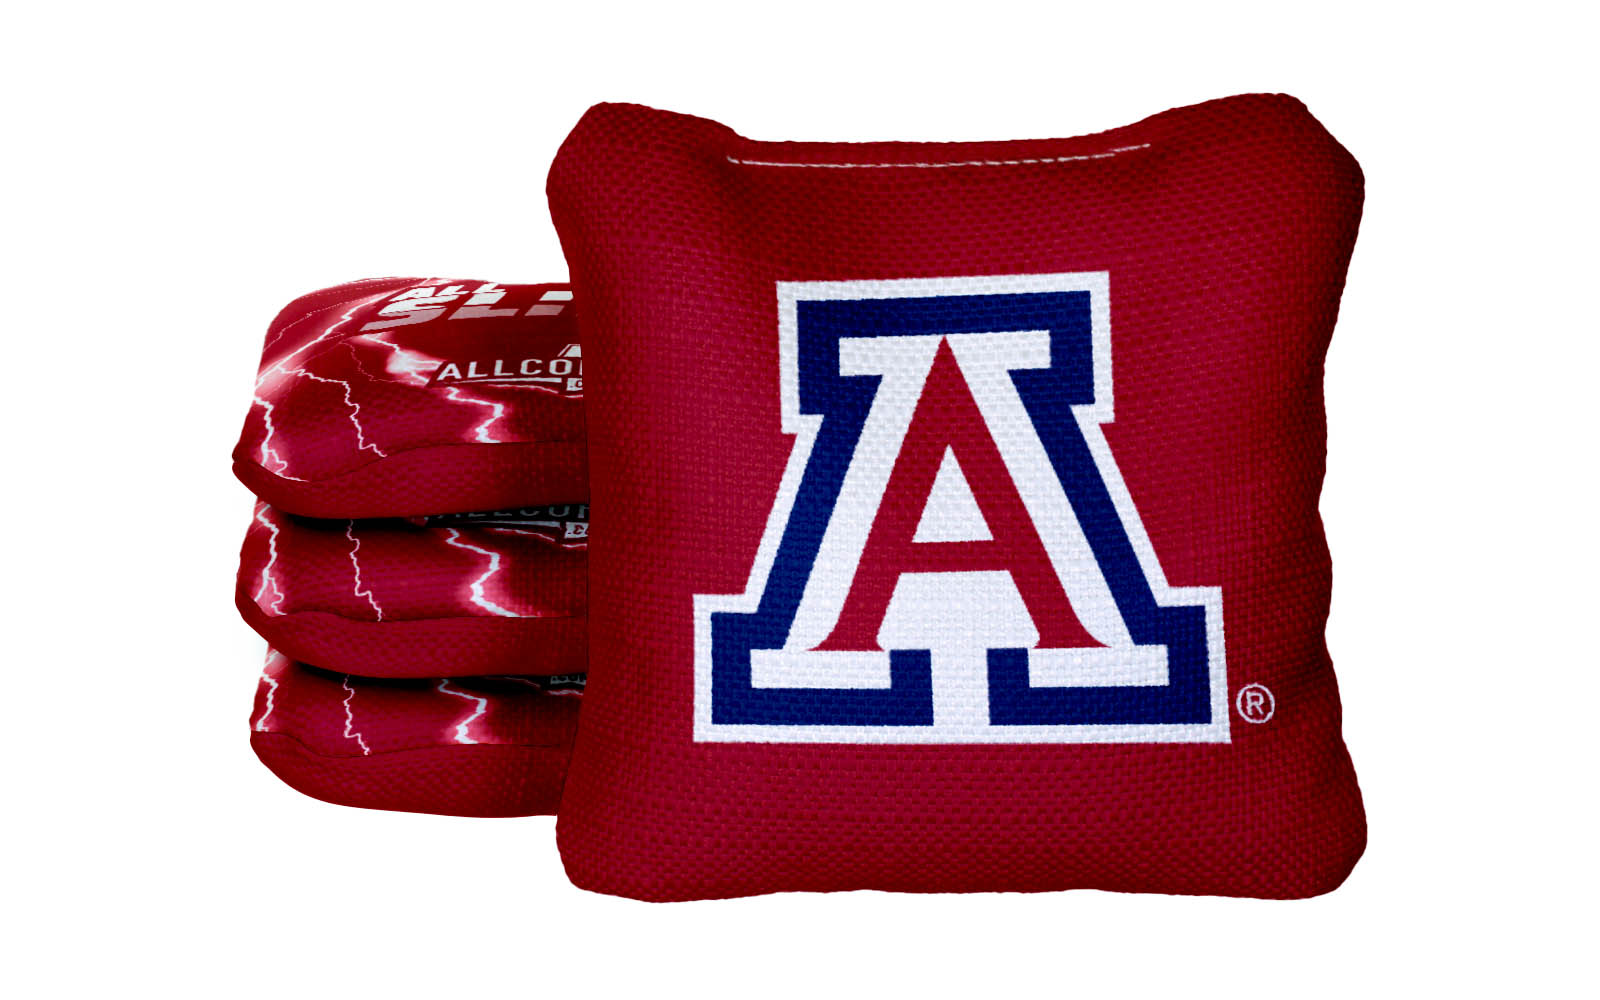 Officially Licensed Collegiate Cornhole Bags - AllCornhole All Slide 2.0 - Set of 4 - University of Arizona